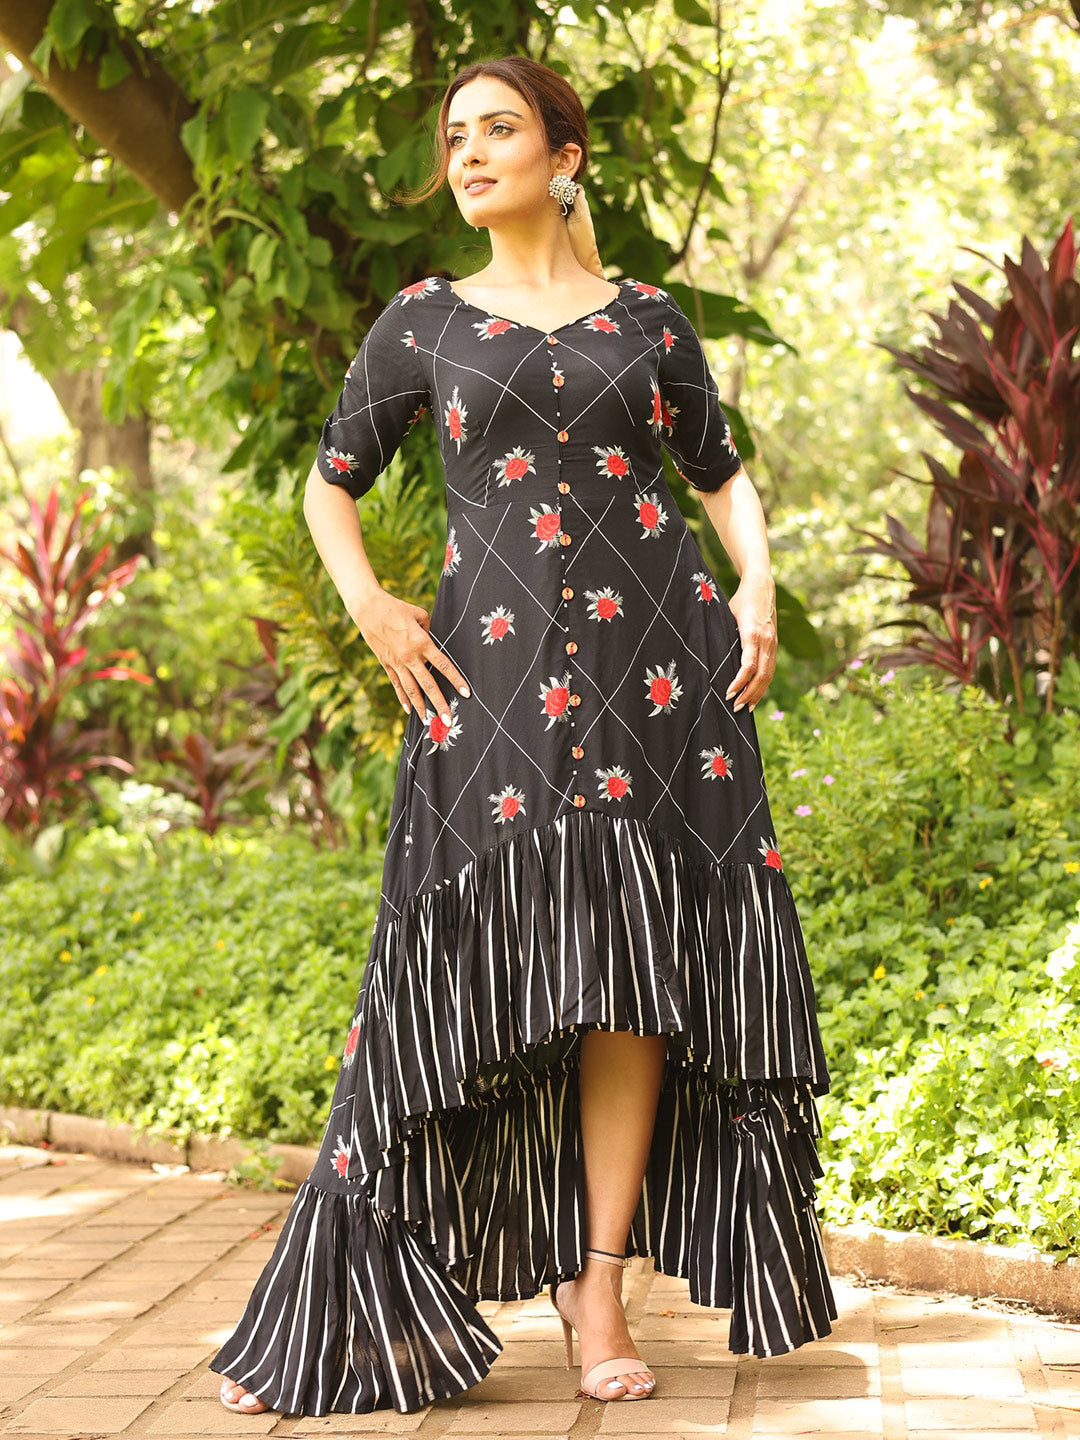 Helsi Audrey Square-Neck Floral Applique Sheer Midi Dress | Anthropologie